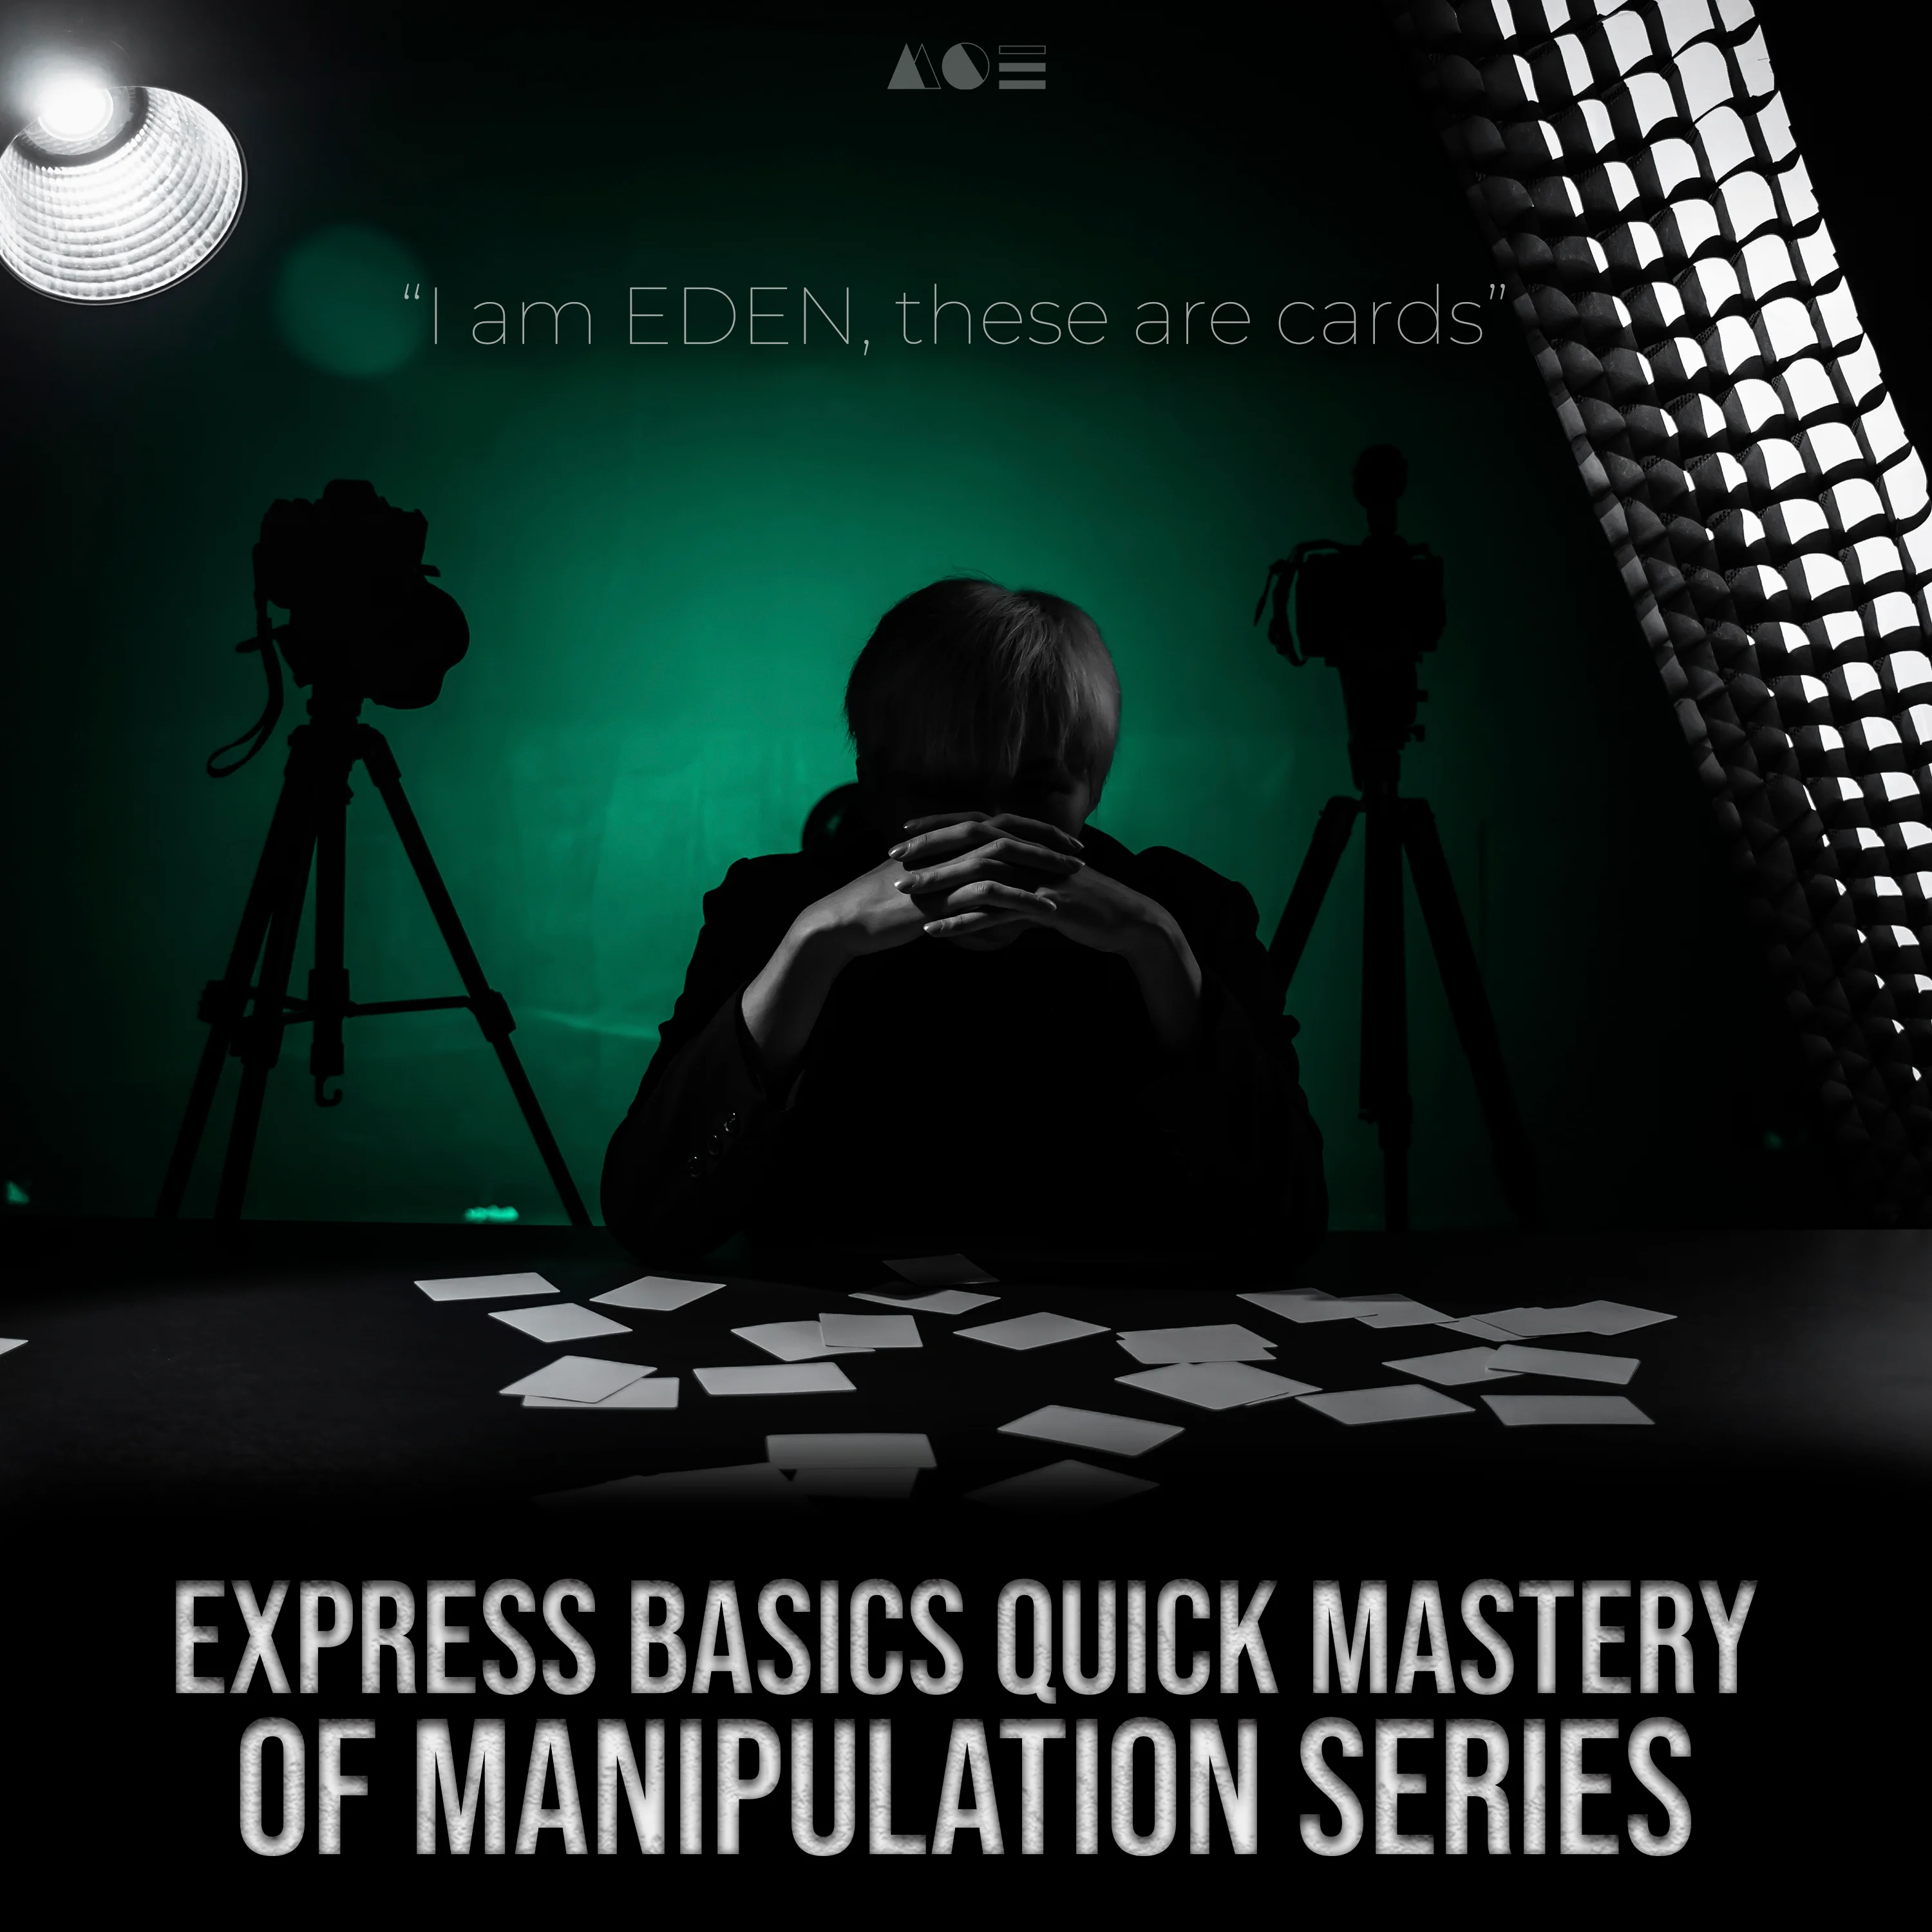 Express Basics Quick Mastery Of Manipulation Series 'CARD'